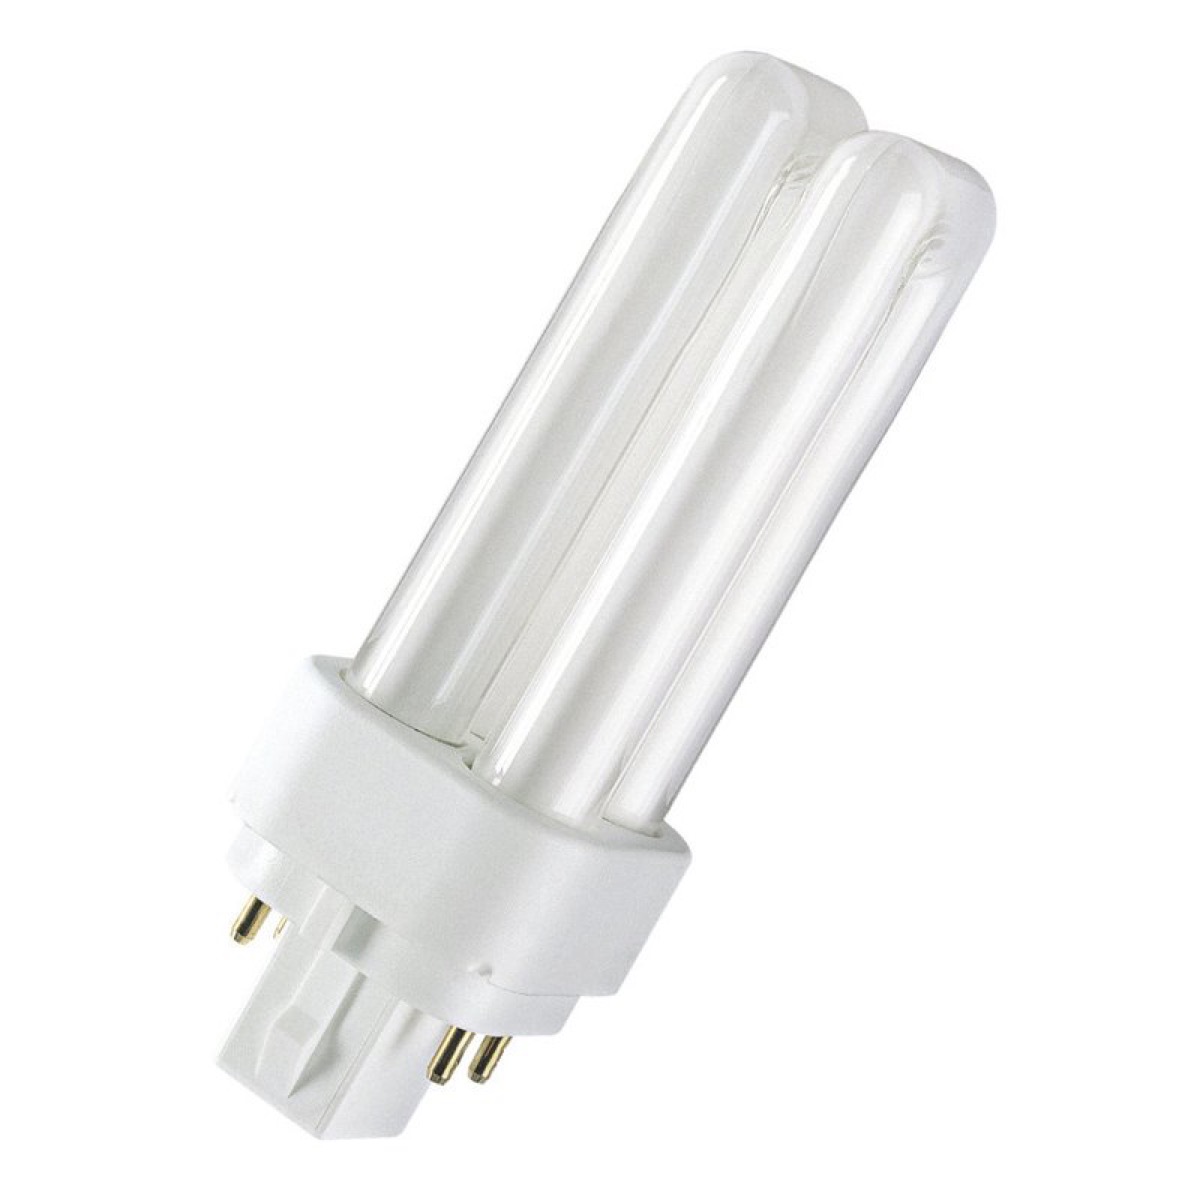 UNI-ElektroOSRAM Kompaktlampe G24d-1 13W Warmton